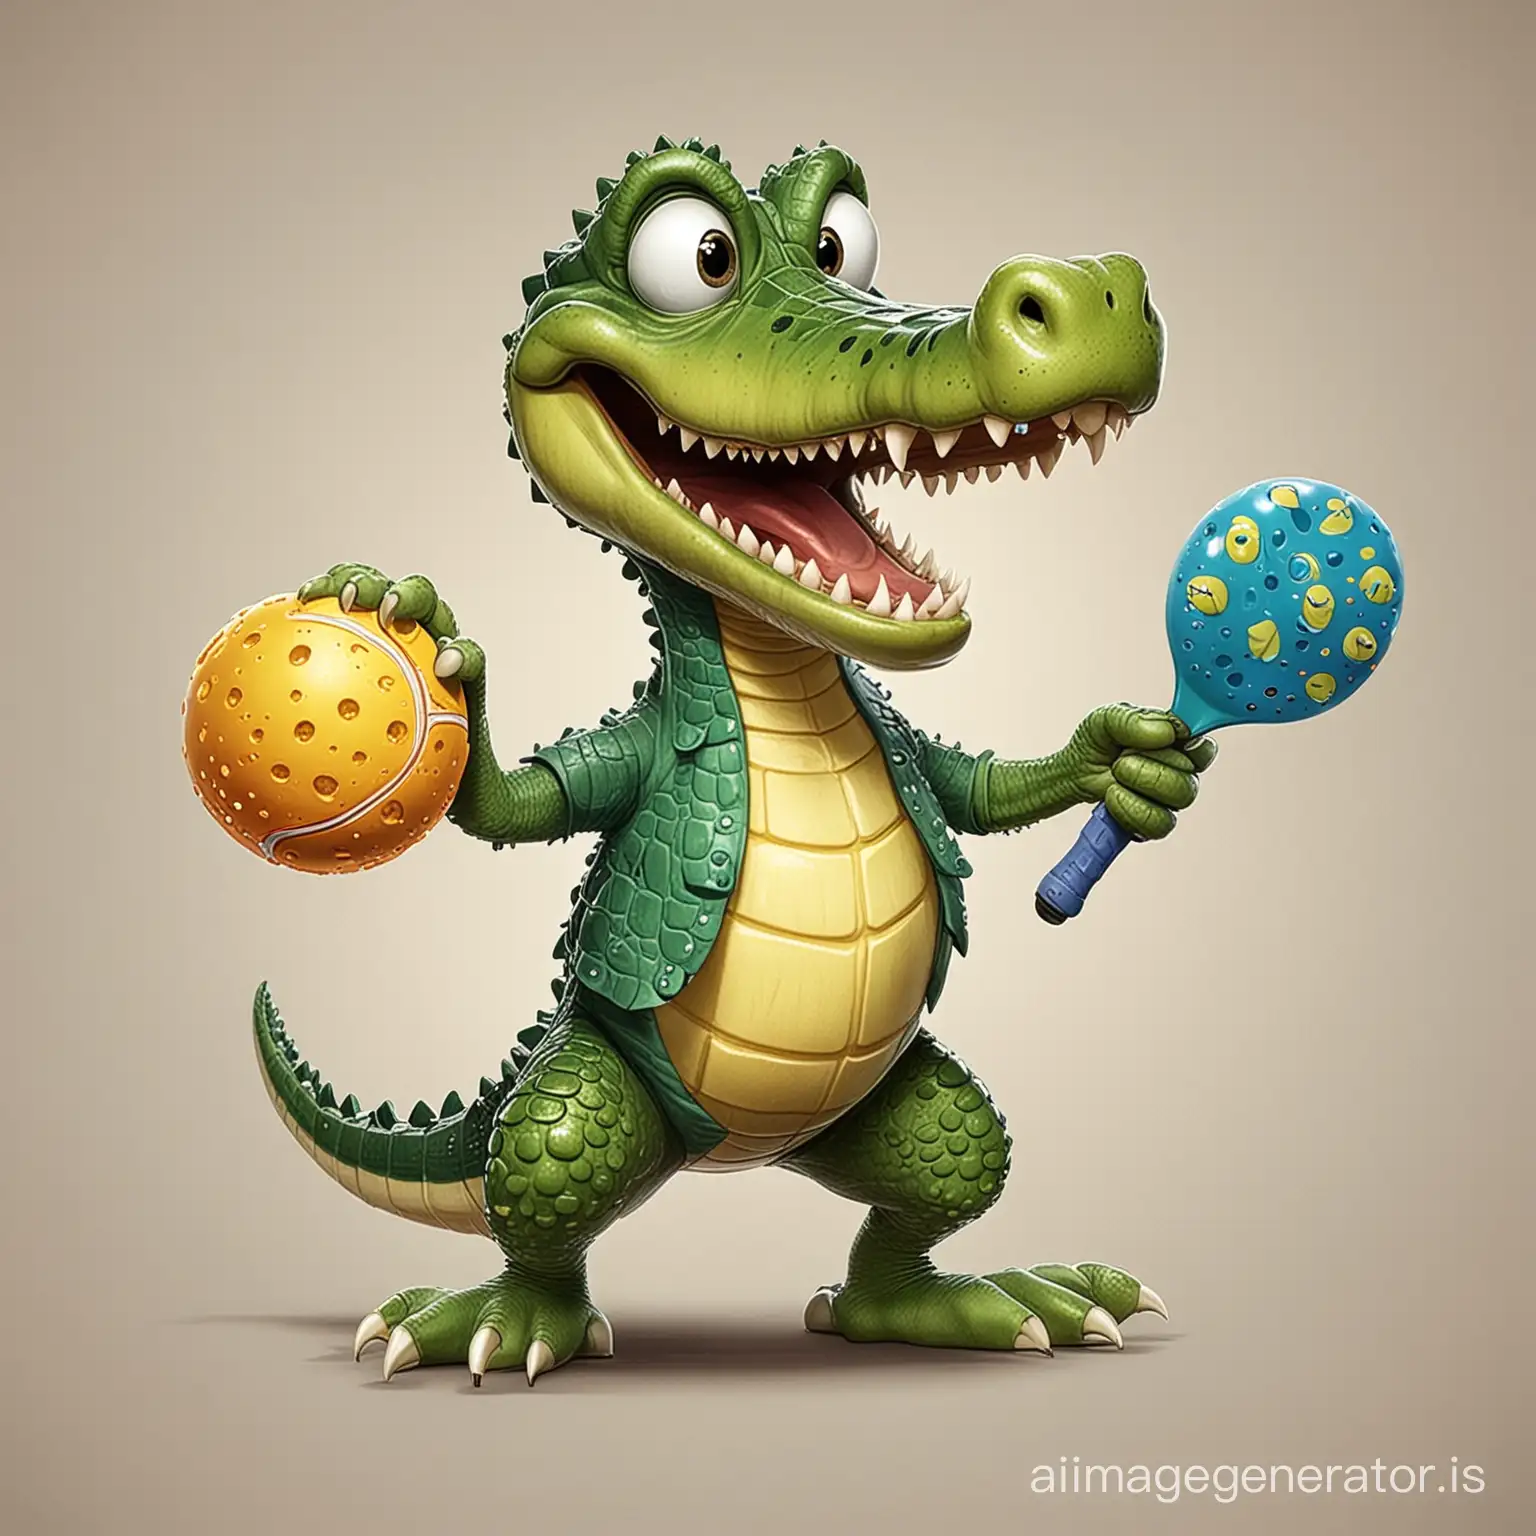 Cartoon alligator holding a Pickleball